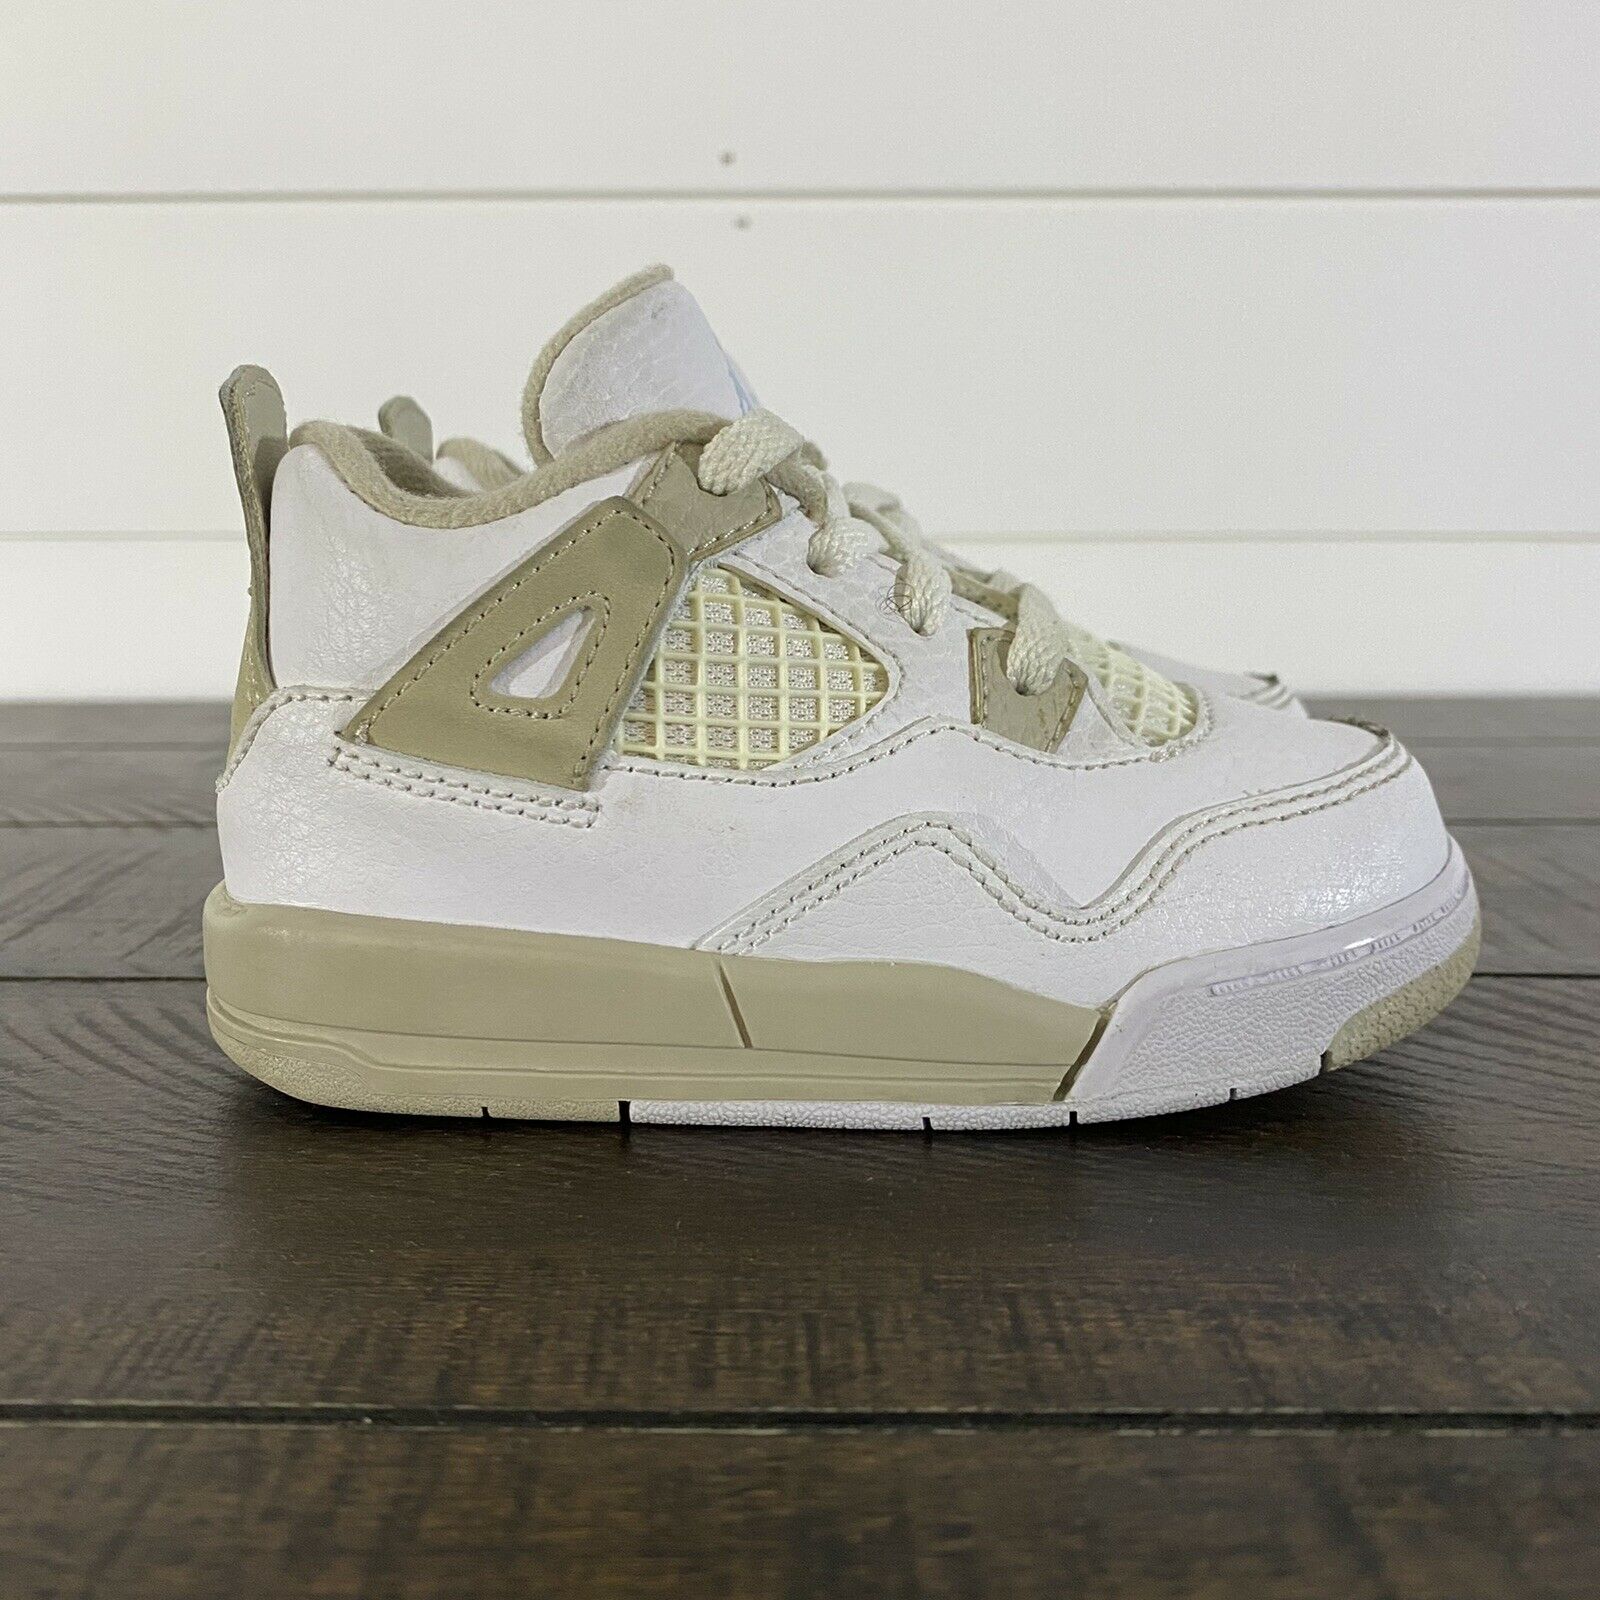 Nike Air Jordan IV 4 Retro GT 'Linen' White/Light Sand Toddler Shoes Size 7C